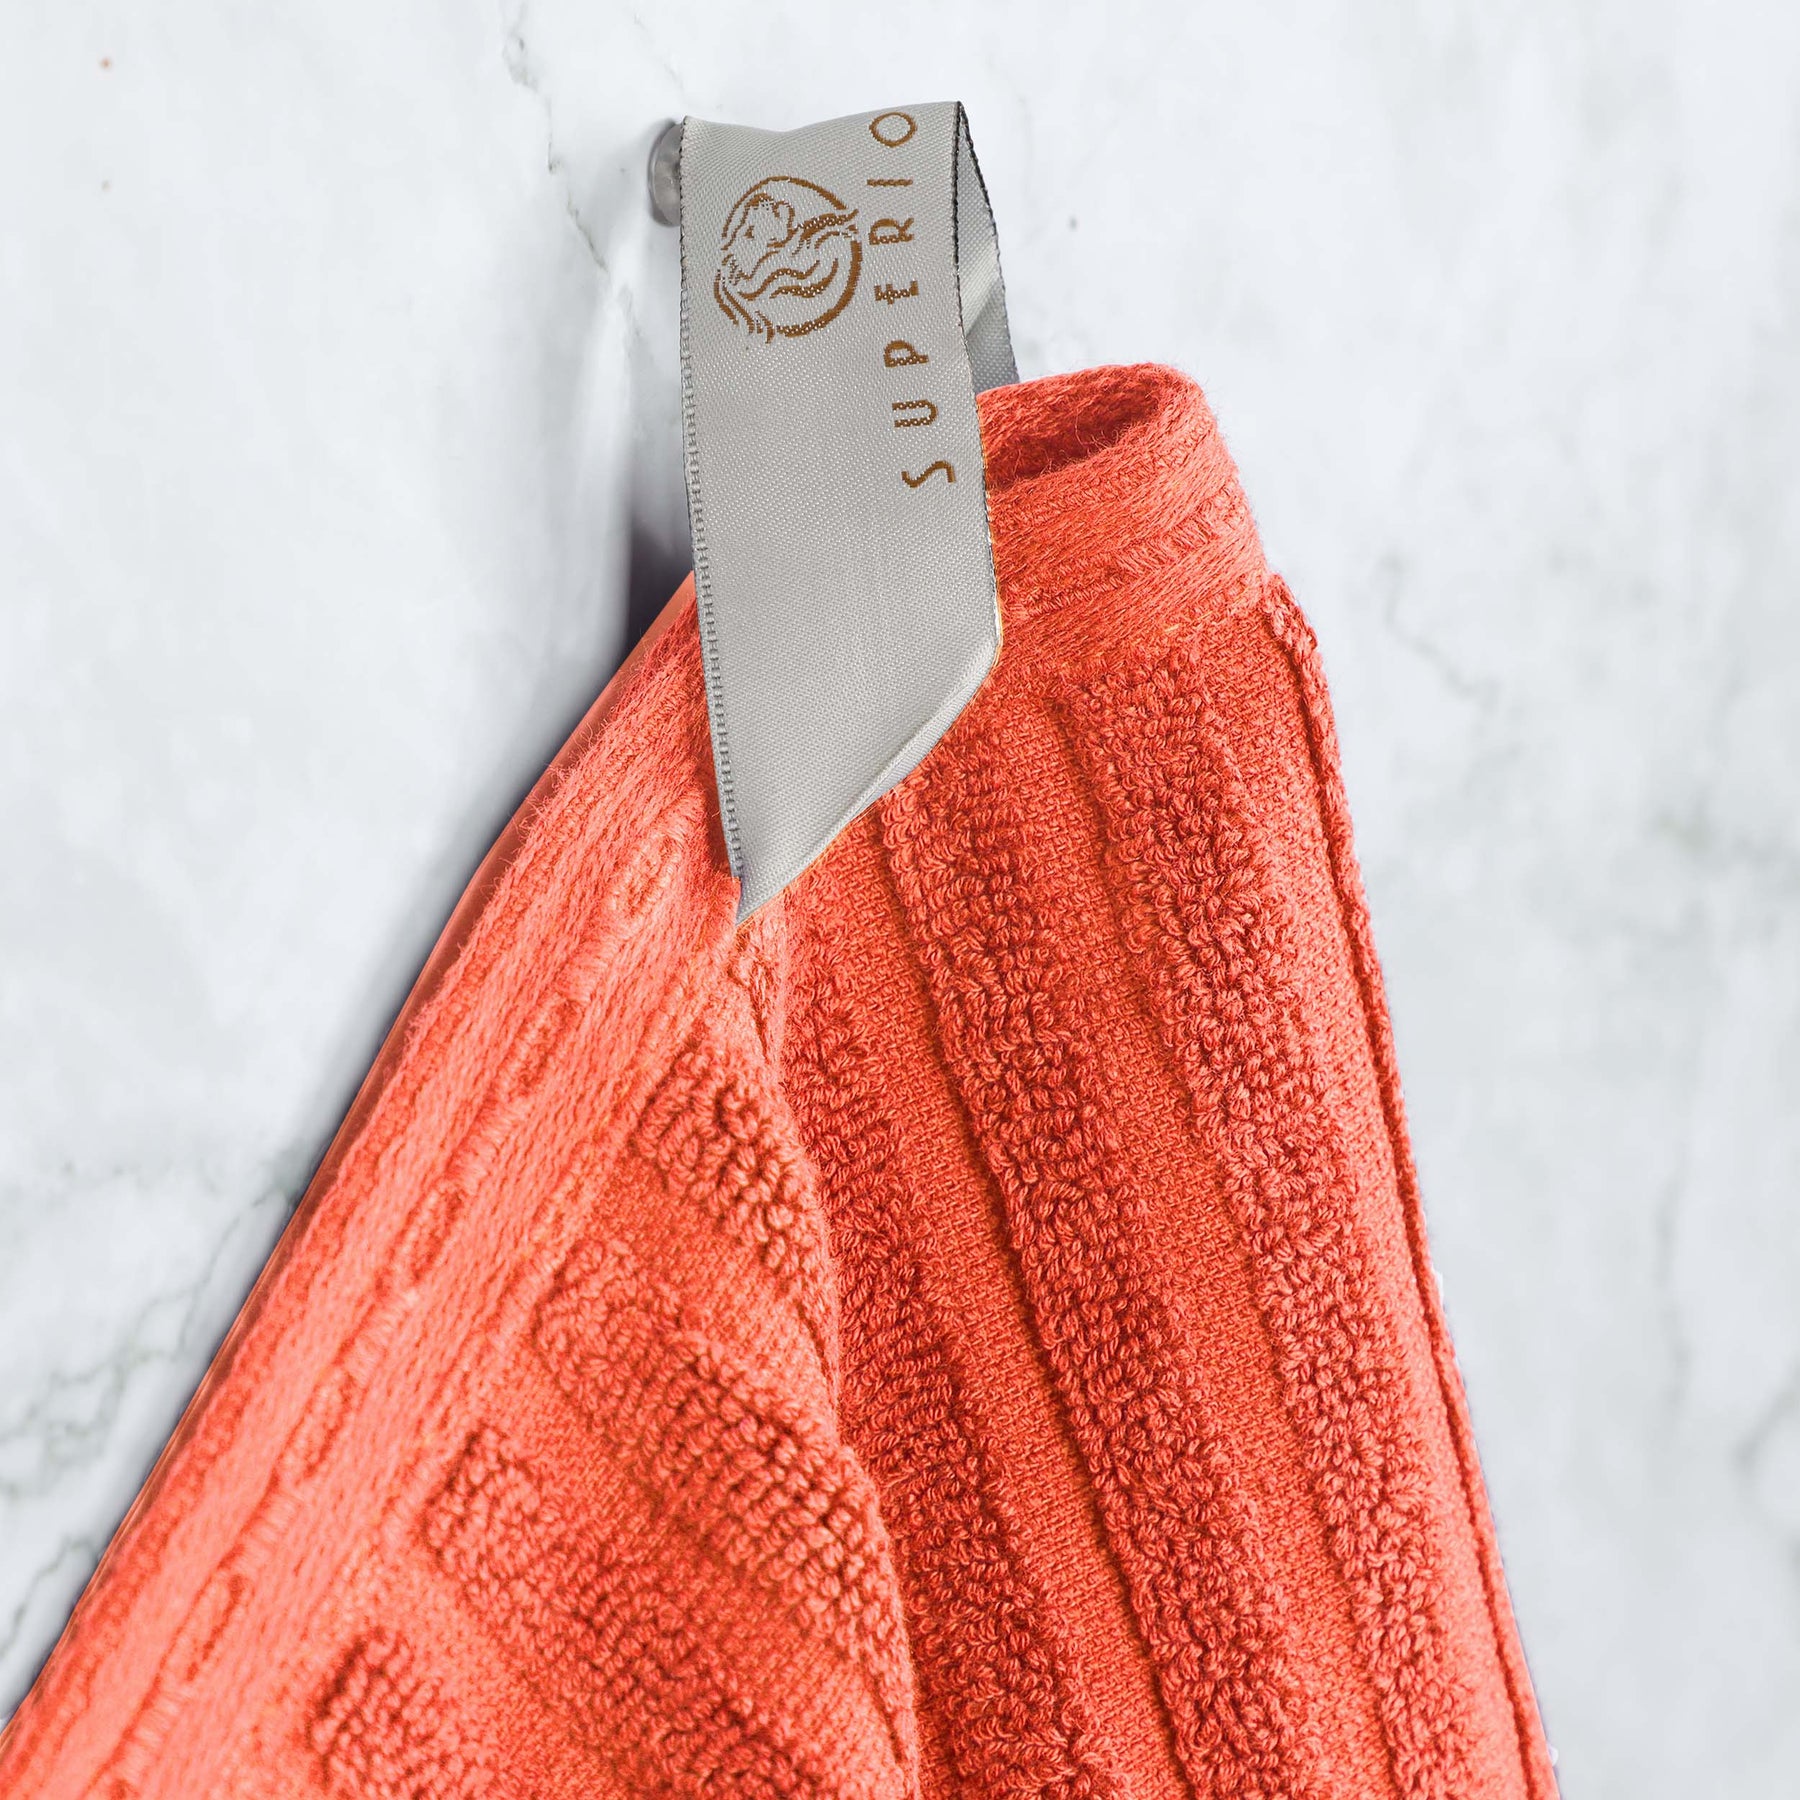 Ribbed Textured Cotton Bath Sheet Ultra-Absorbent Towel Set -  Coral